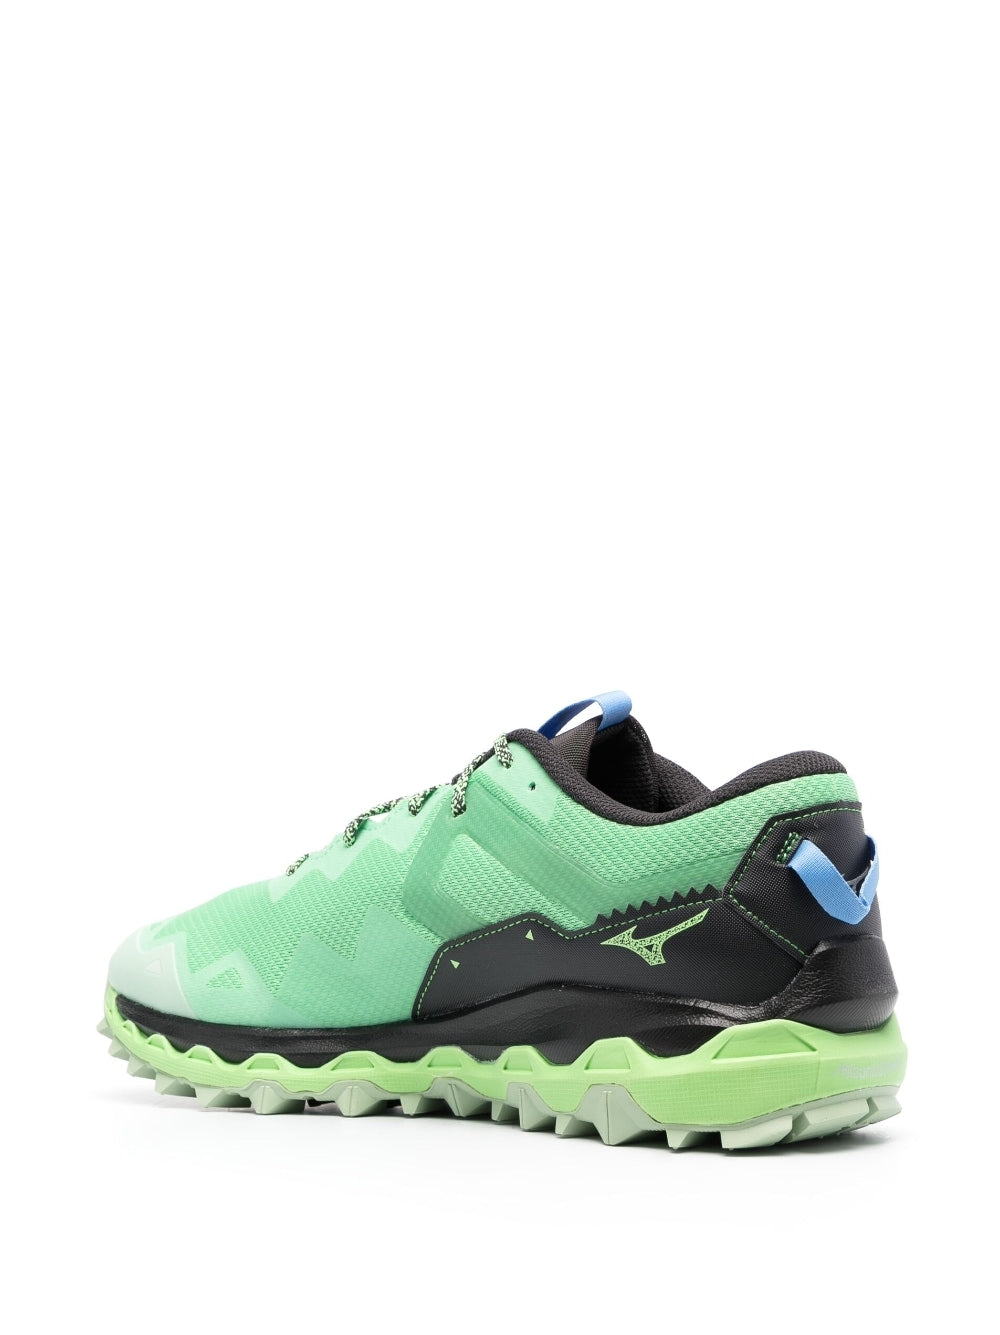 Black/green Wave mujin 9 running sneakers